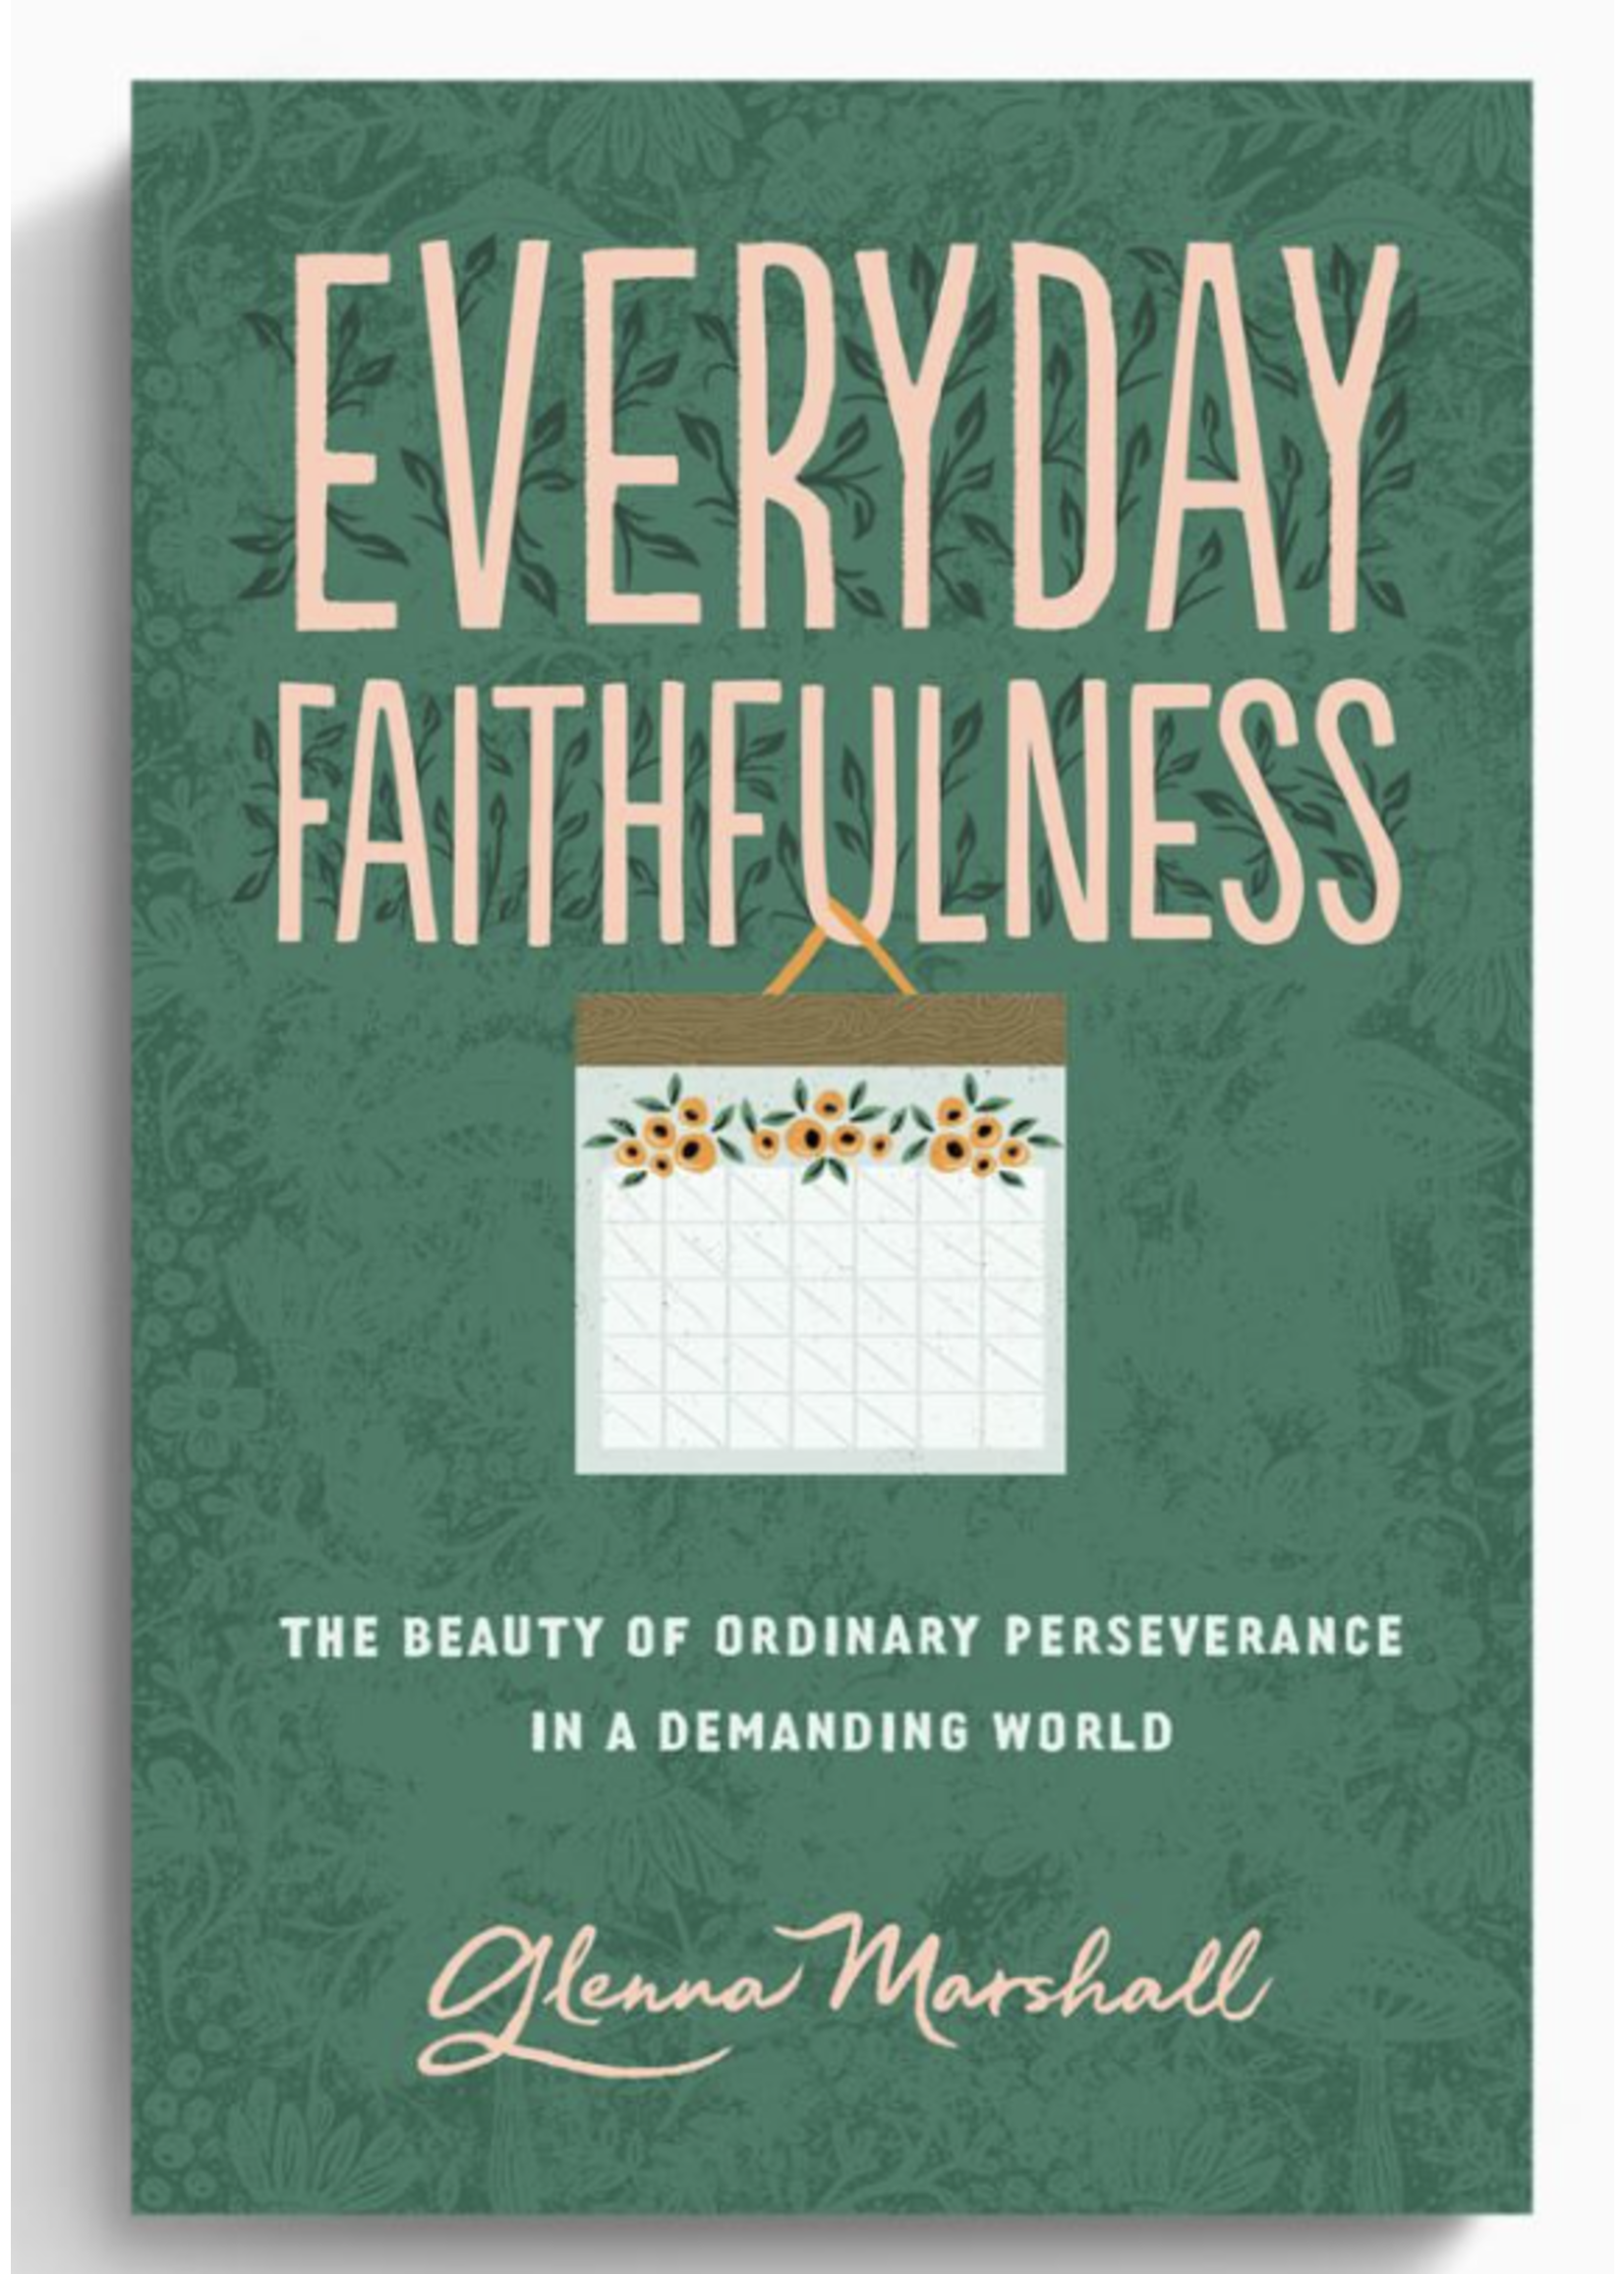 Everyday Faithfulness: The Beauty of Ordinary Perseverance in a Demanding World [Glenna Marshall]